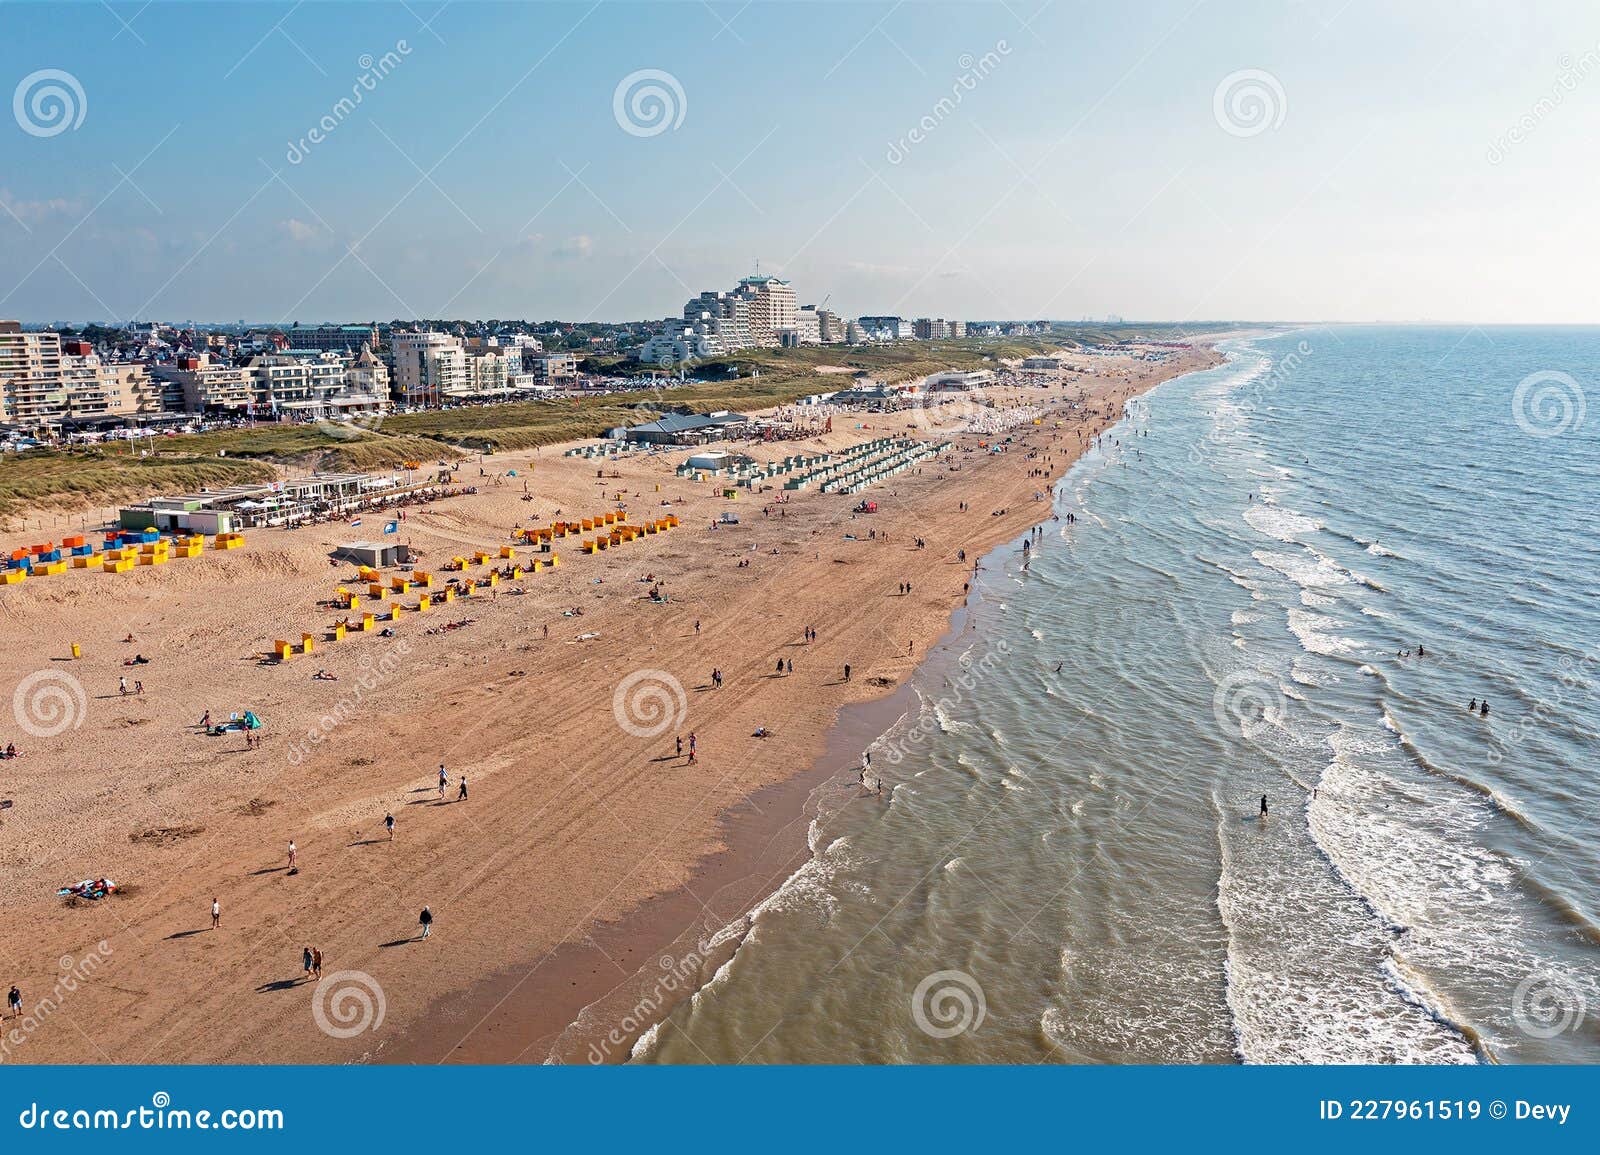 Middag eten Plateau fluweel Aerial from the Beach in Noordwijk Aan Zee in the Netherlands Stock Image -  Image of sandbeach, leisure: 227961519